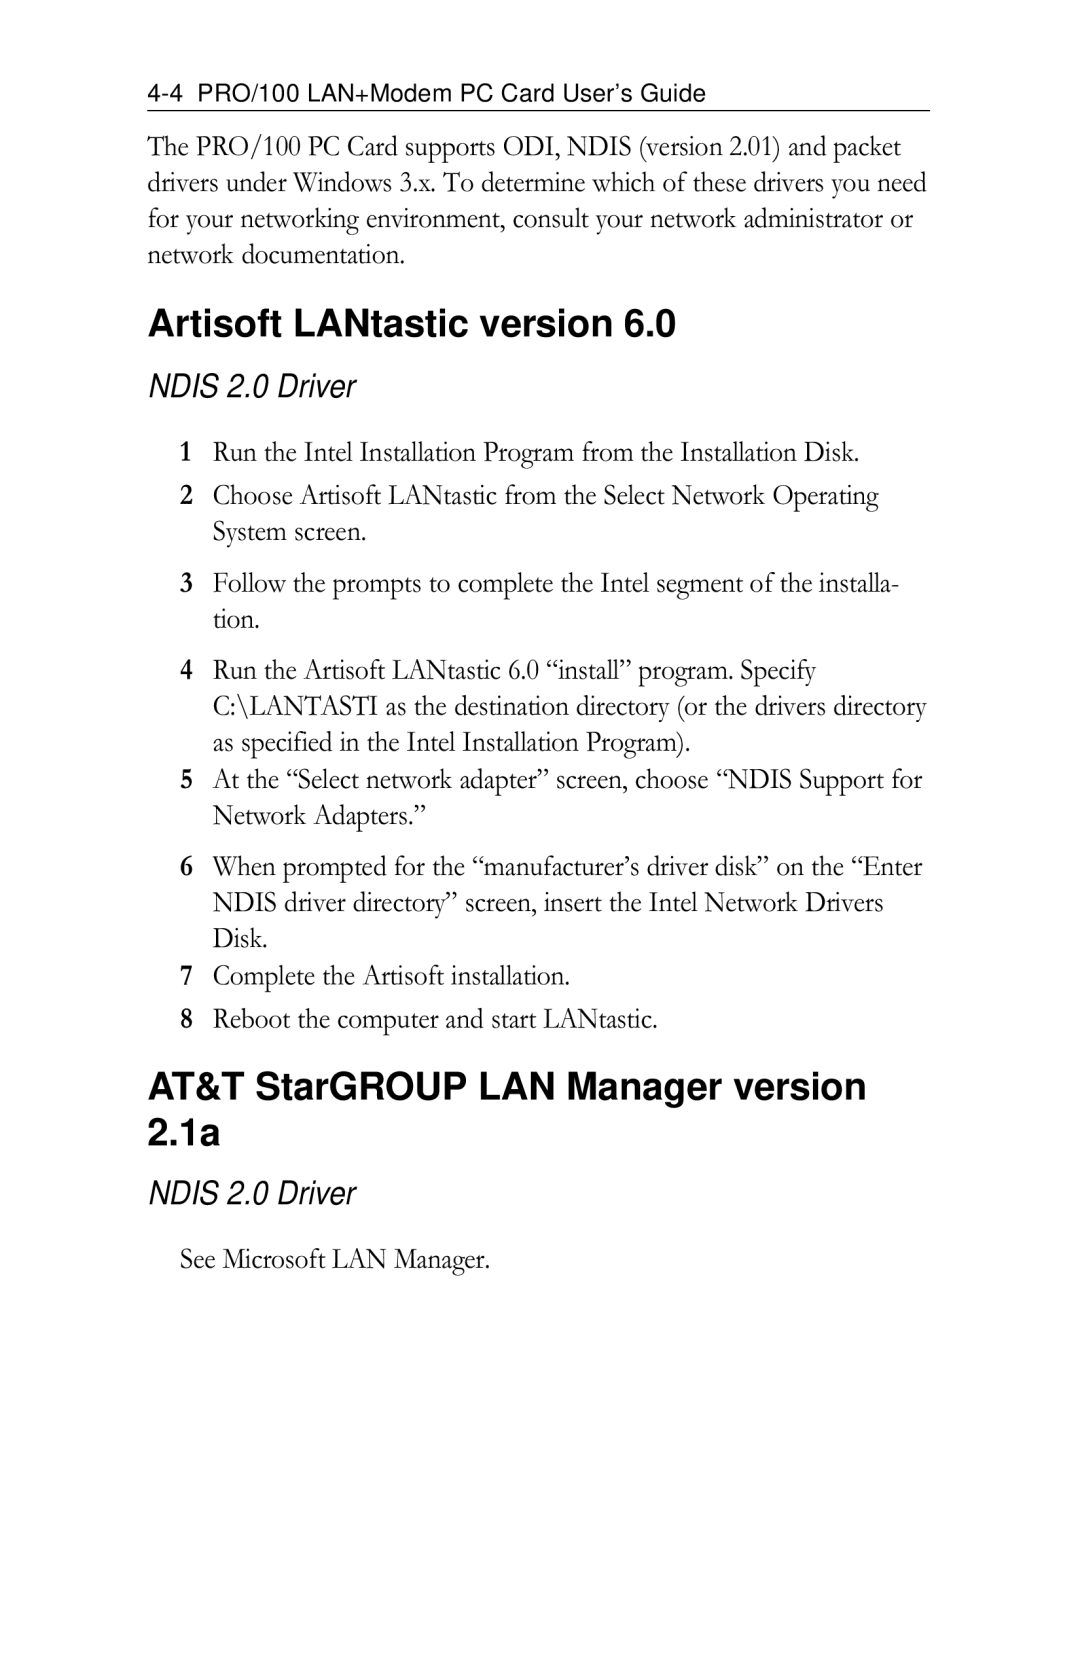 Intel PRO/100 appendix Artisoft LANtastic version, AT&T StarGROUP LAN Manager version 2.1a, See Microsoft LAN Manager 